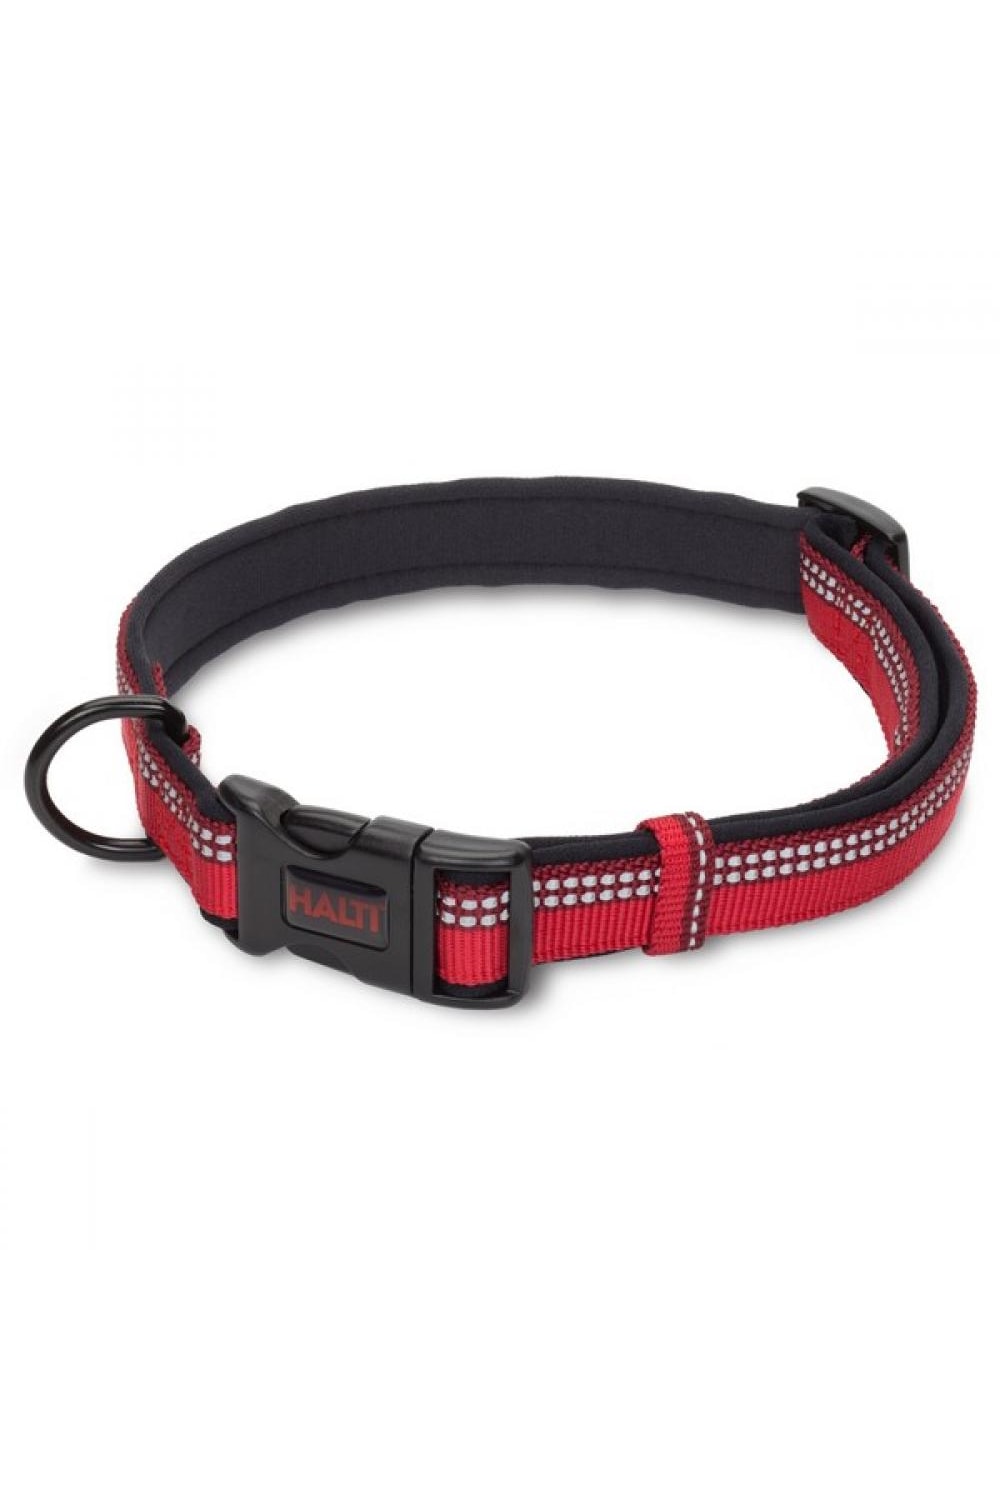 Company Of Animals Halti Dog Collar (Red) (X Small)